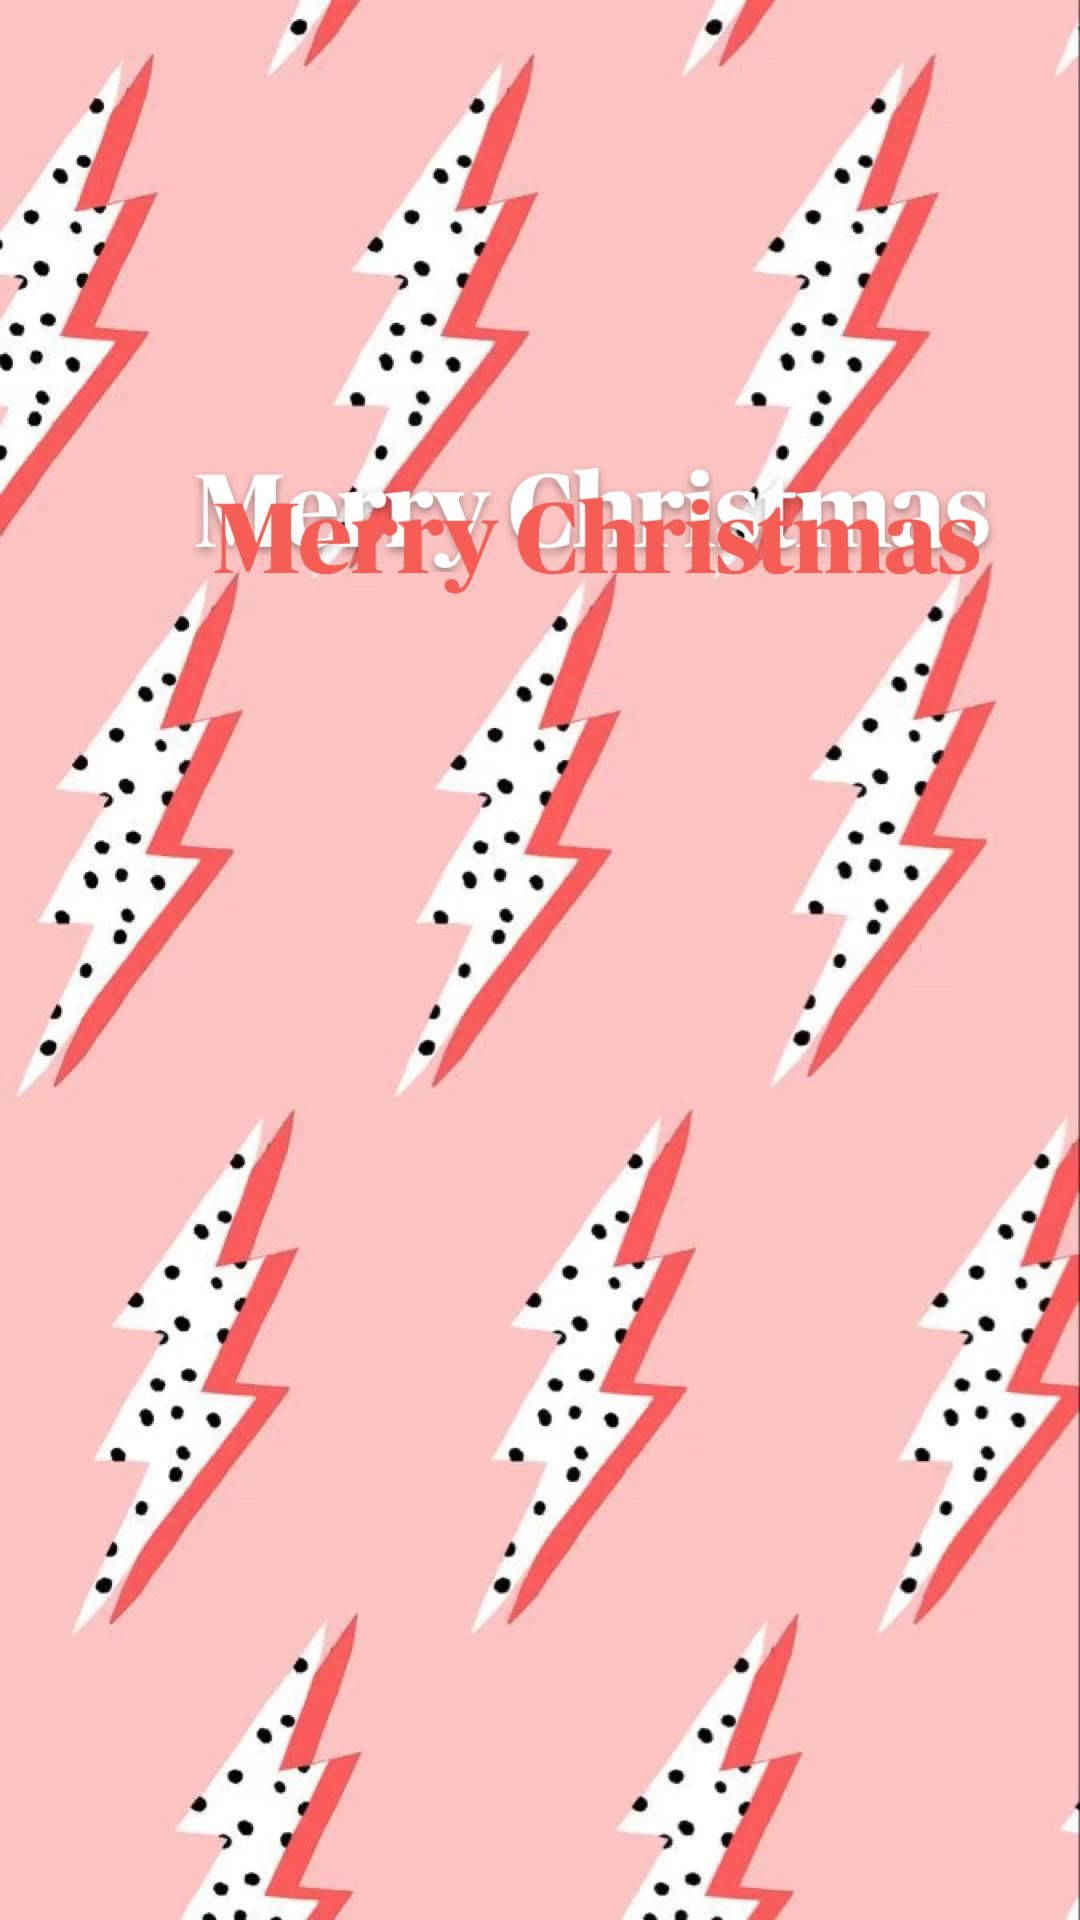 Christmas wallpaper Vectors  Illustrations for Free Download  Freepik